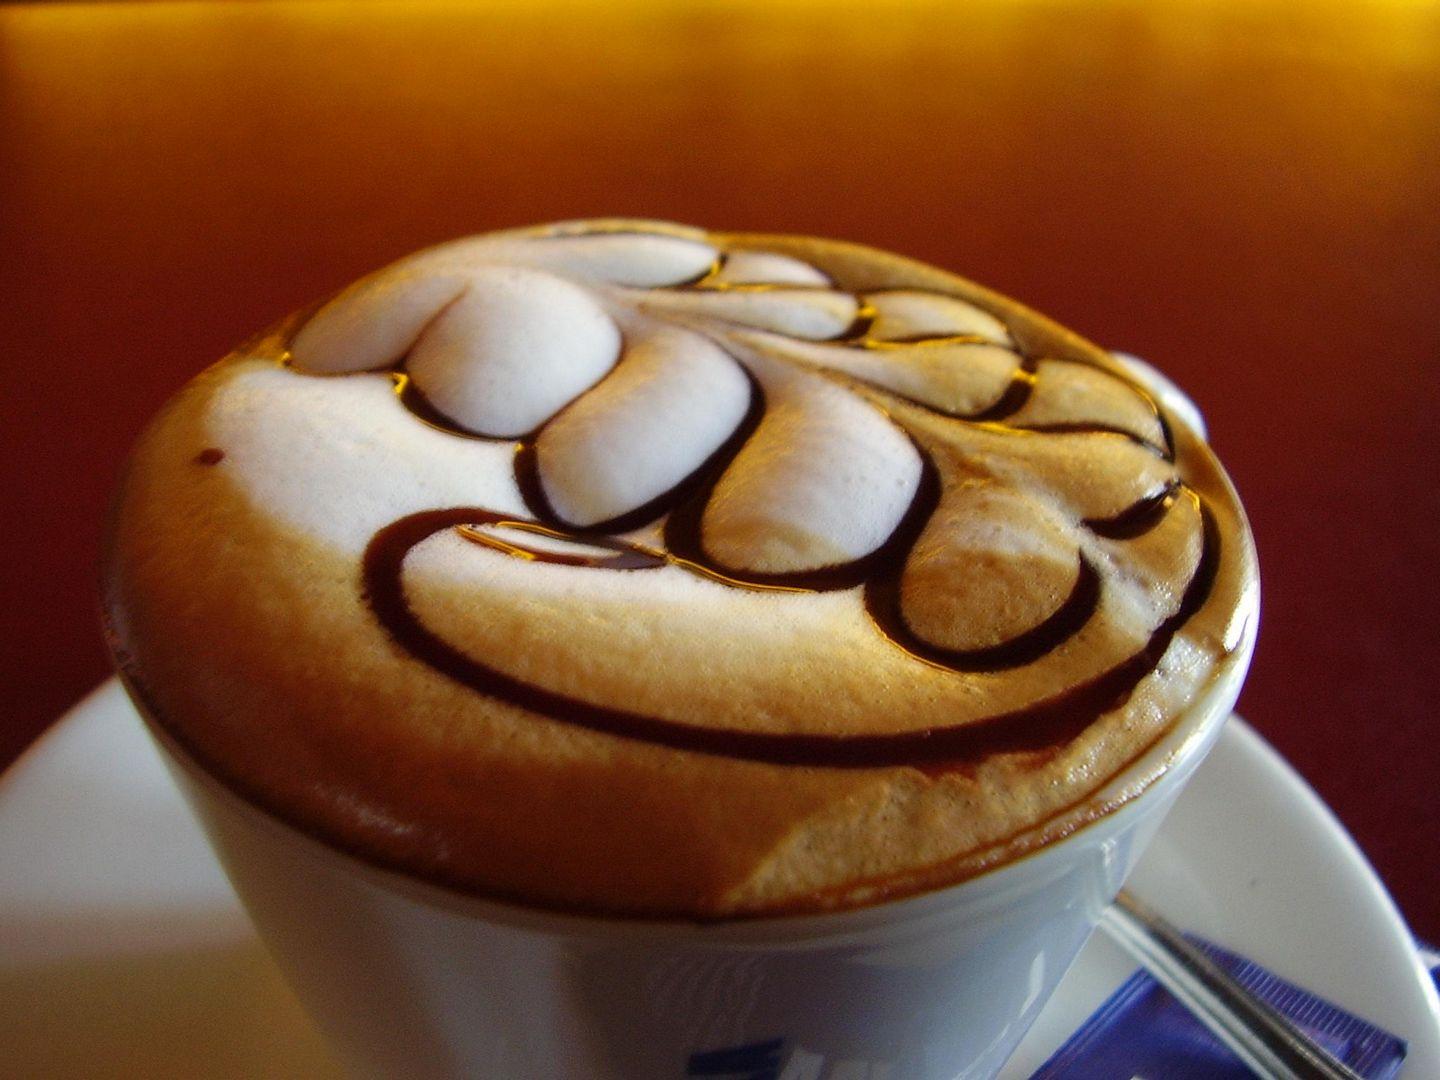 Amazing Coffee Art